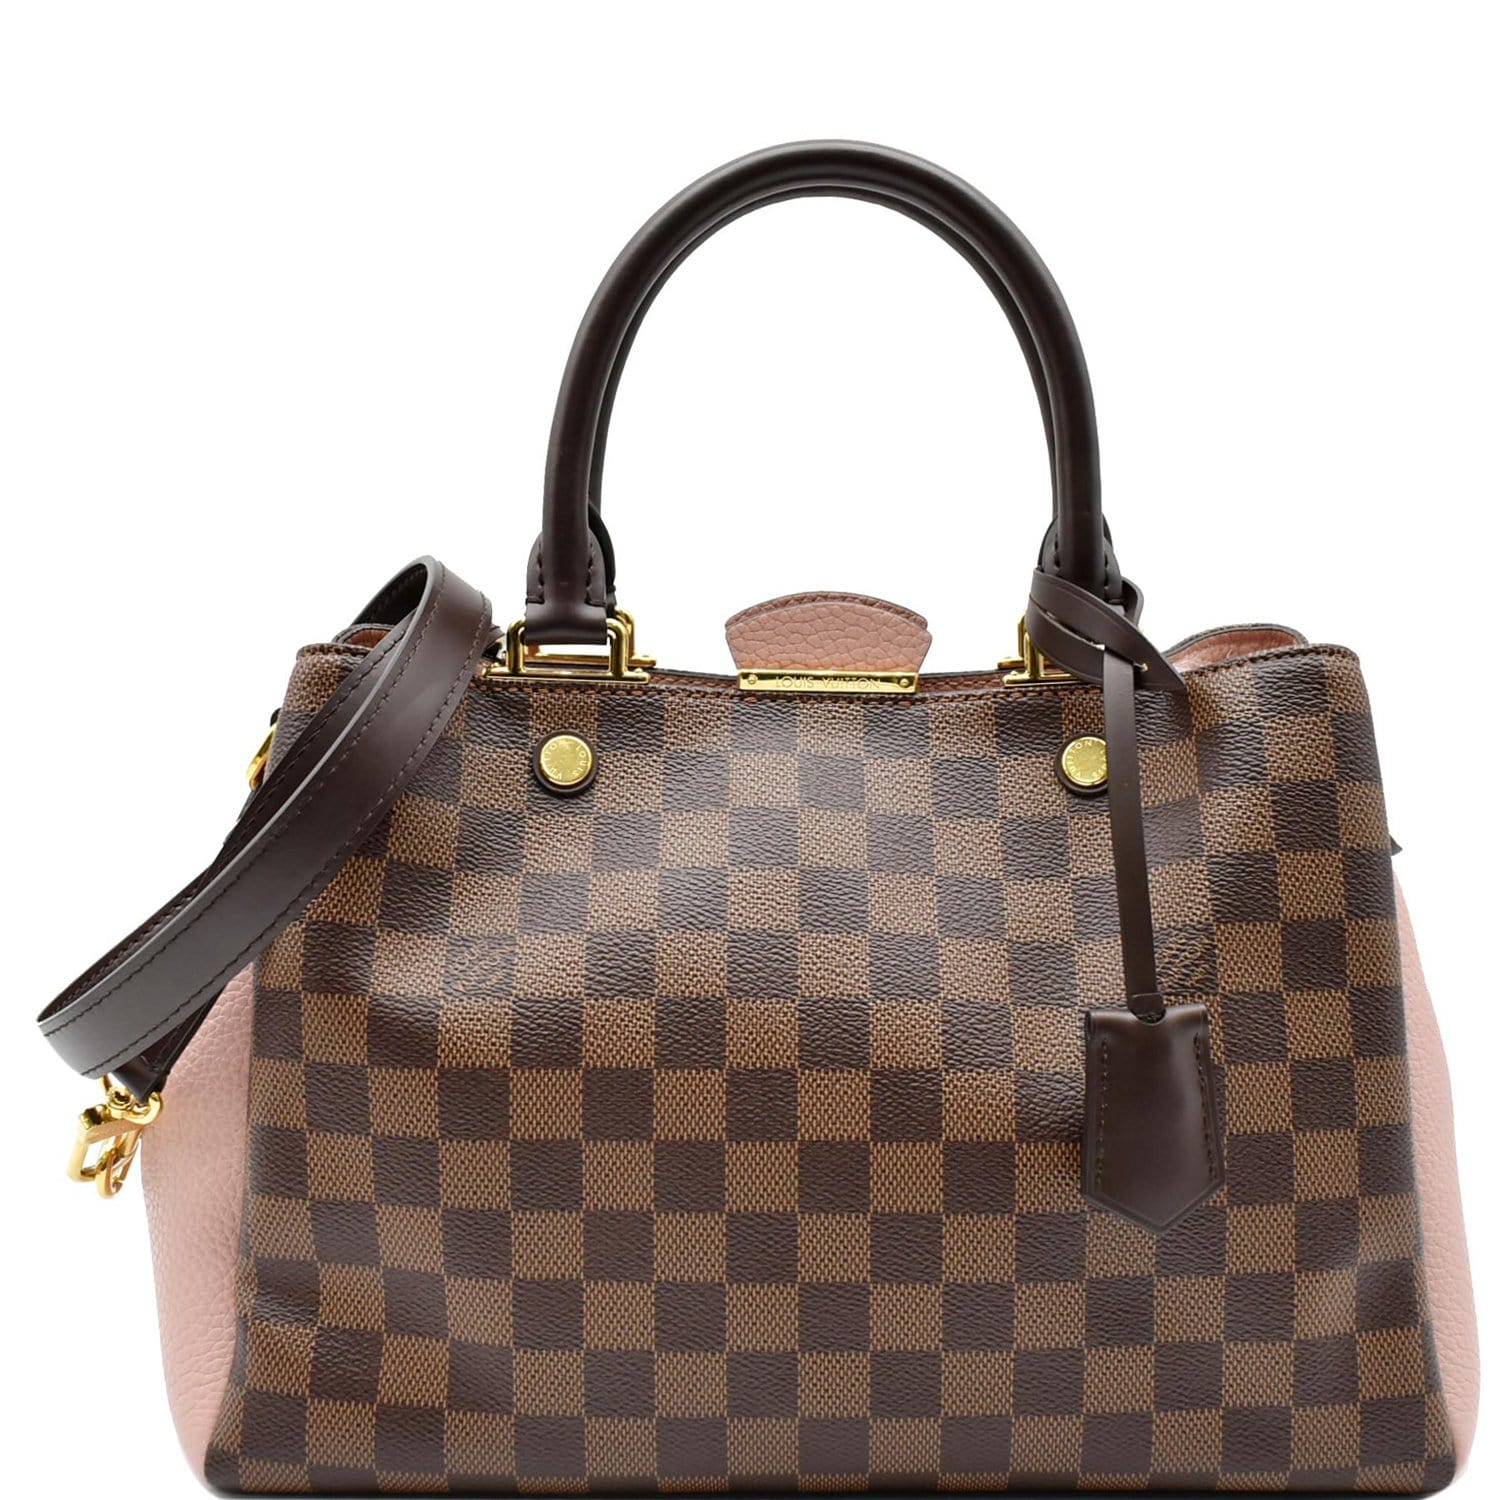 Louis Vuitton, Bags, Louis Vuitton Brittany Bag